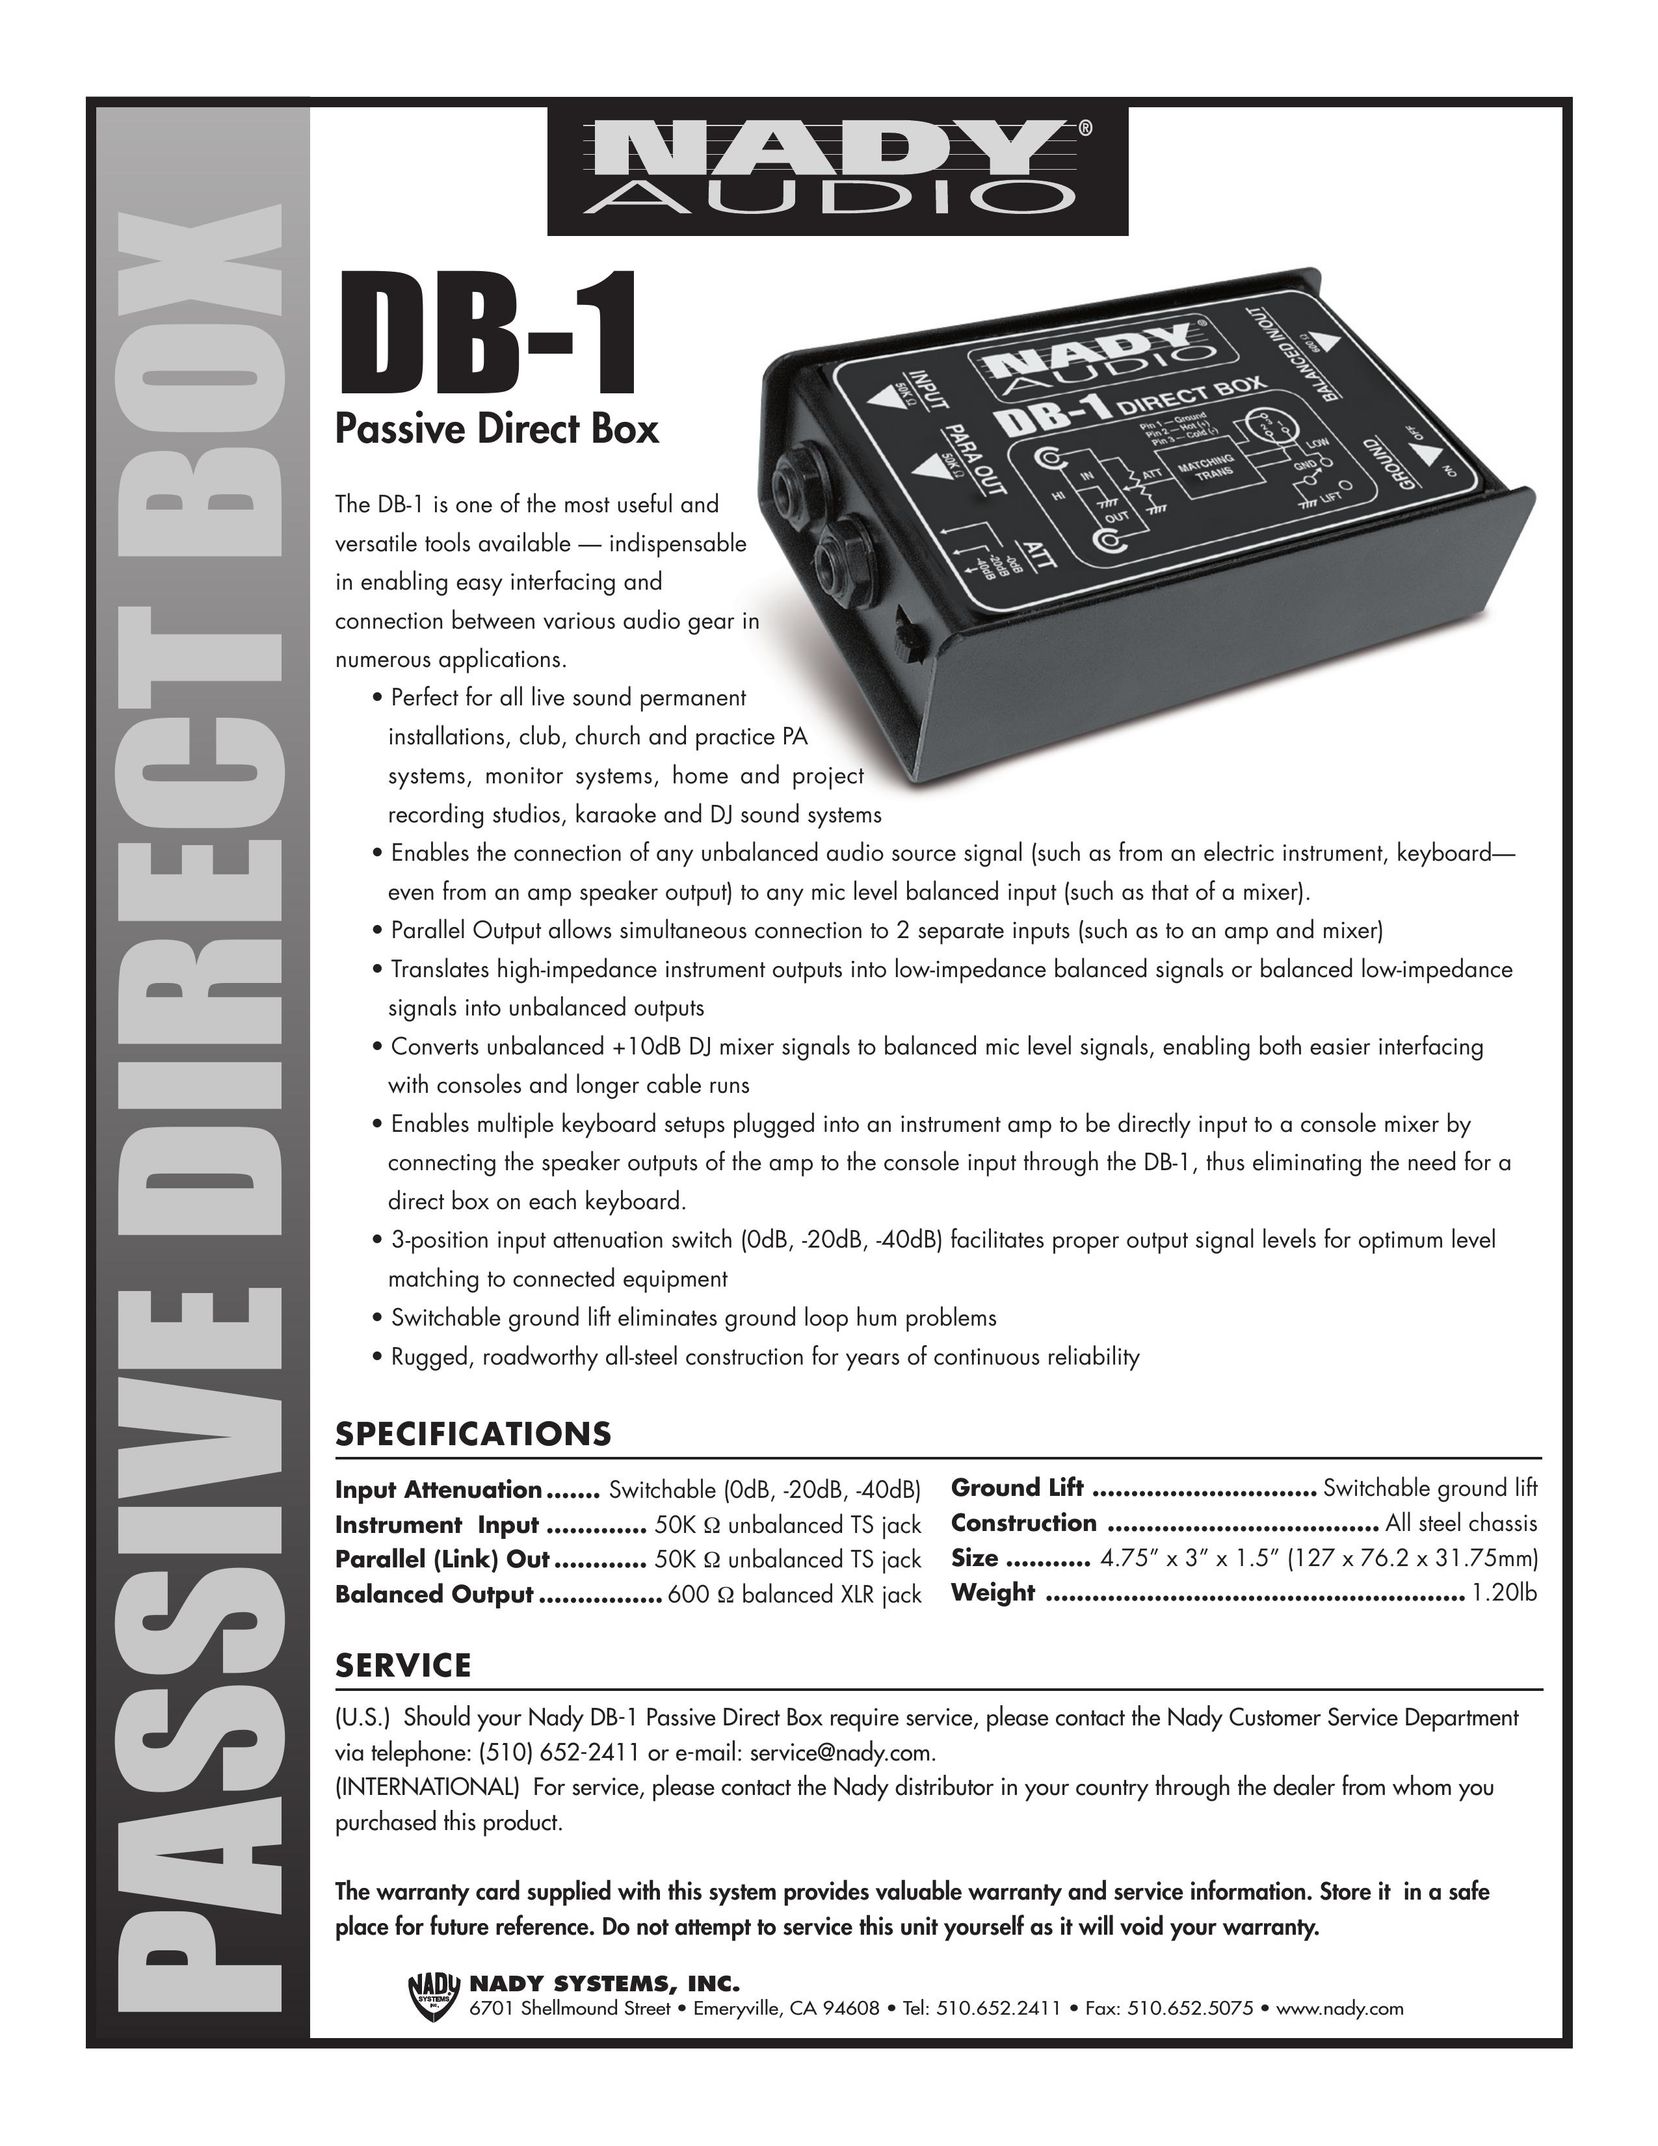 Nady Systems DB1 Surge Protector User Manual